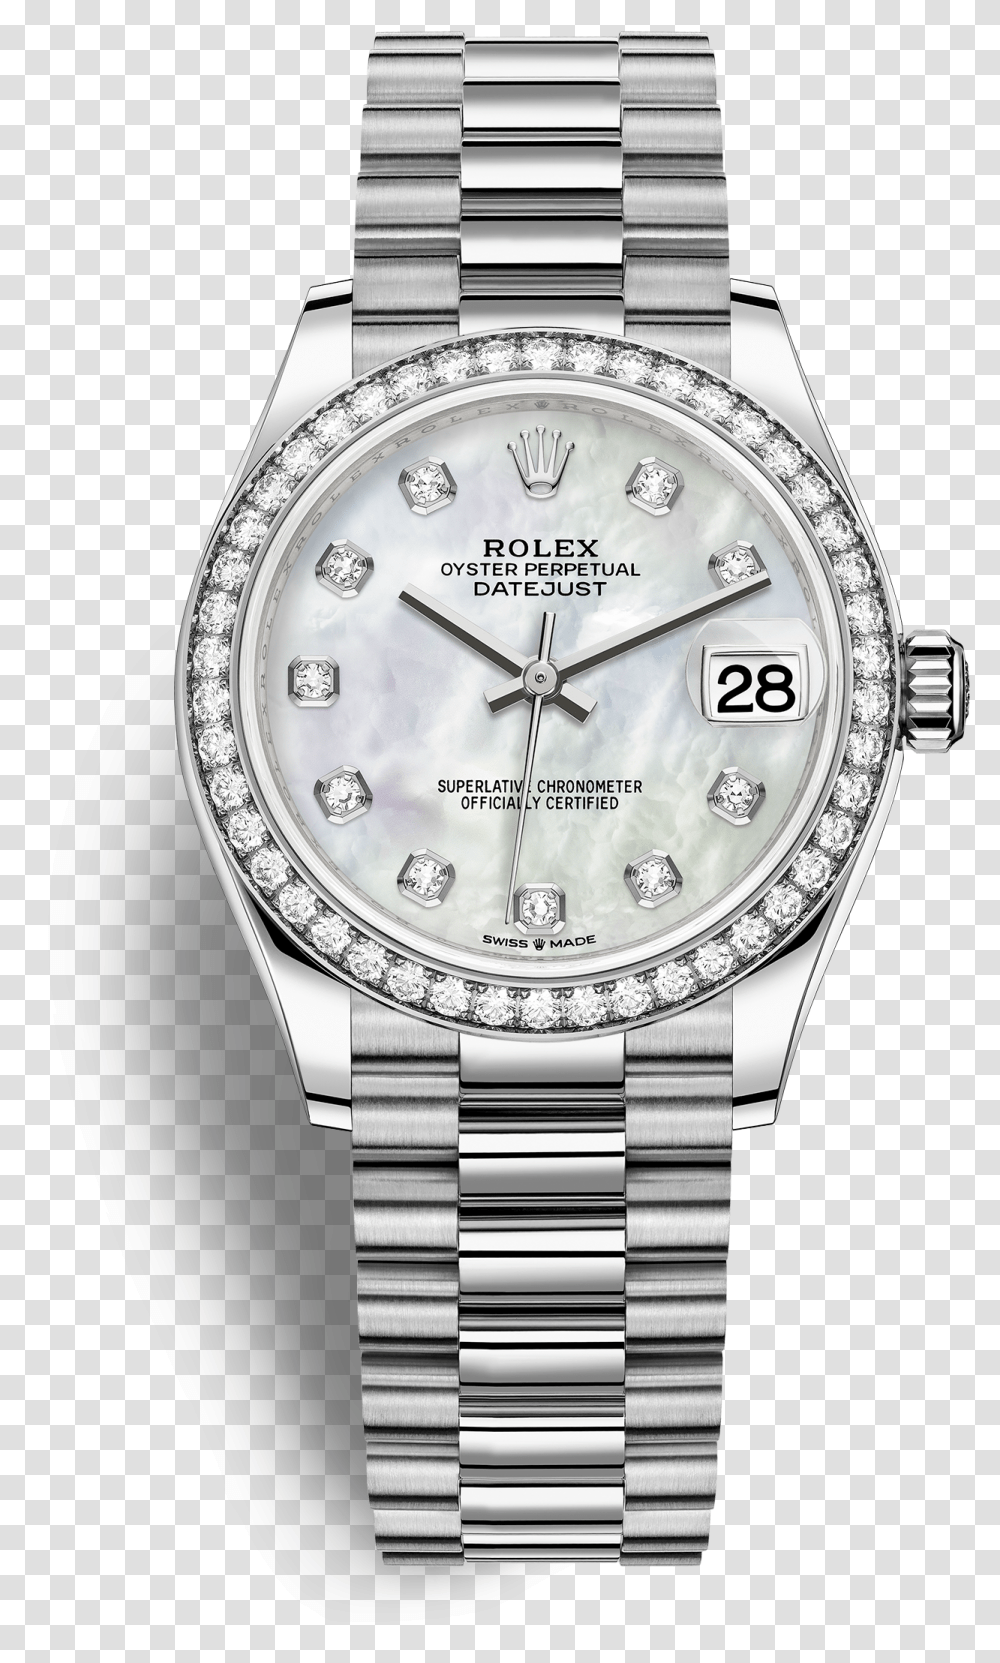 Download Hd Datejust Rolex Datejust 31 Rose Gold Watch, Wristwatch, Clock Tower, Architecture, Building Transparent Png